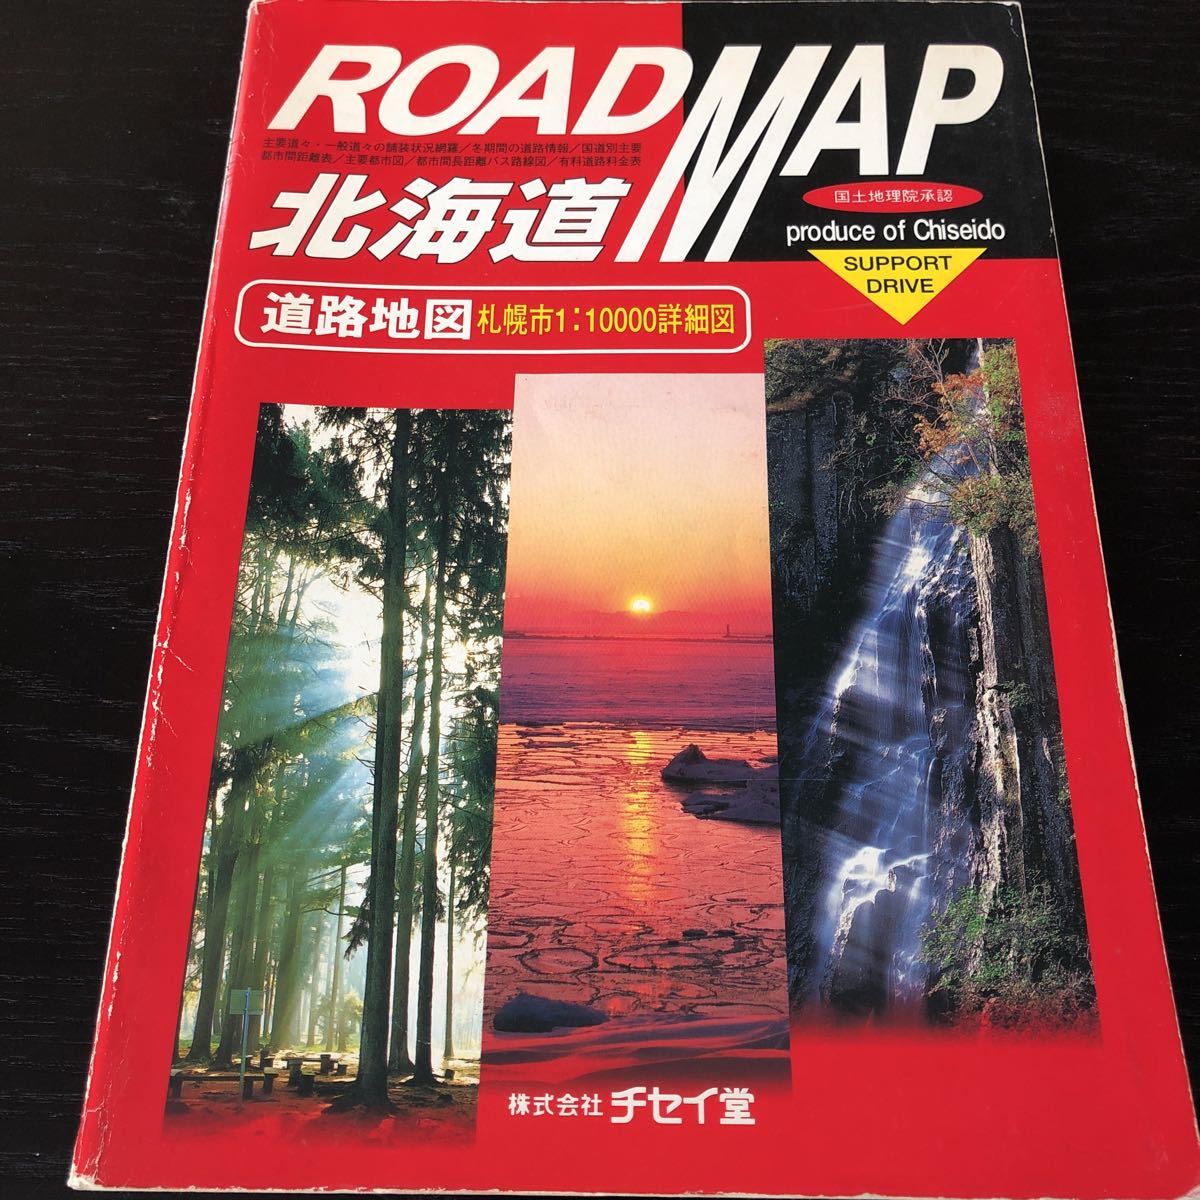 ne54 ROADMAP Hokkaido 1996 год версия Hokkaido карта дорог chisei. Sapporo город маршрут map информация главный город map Hakodate Asahikawa карта Японии гид 